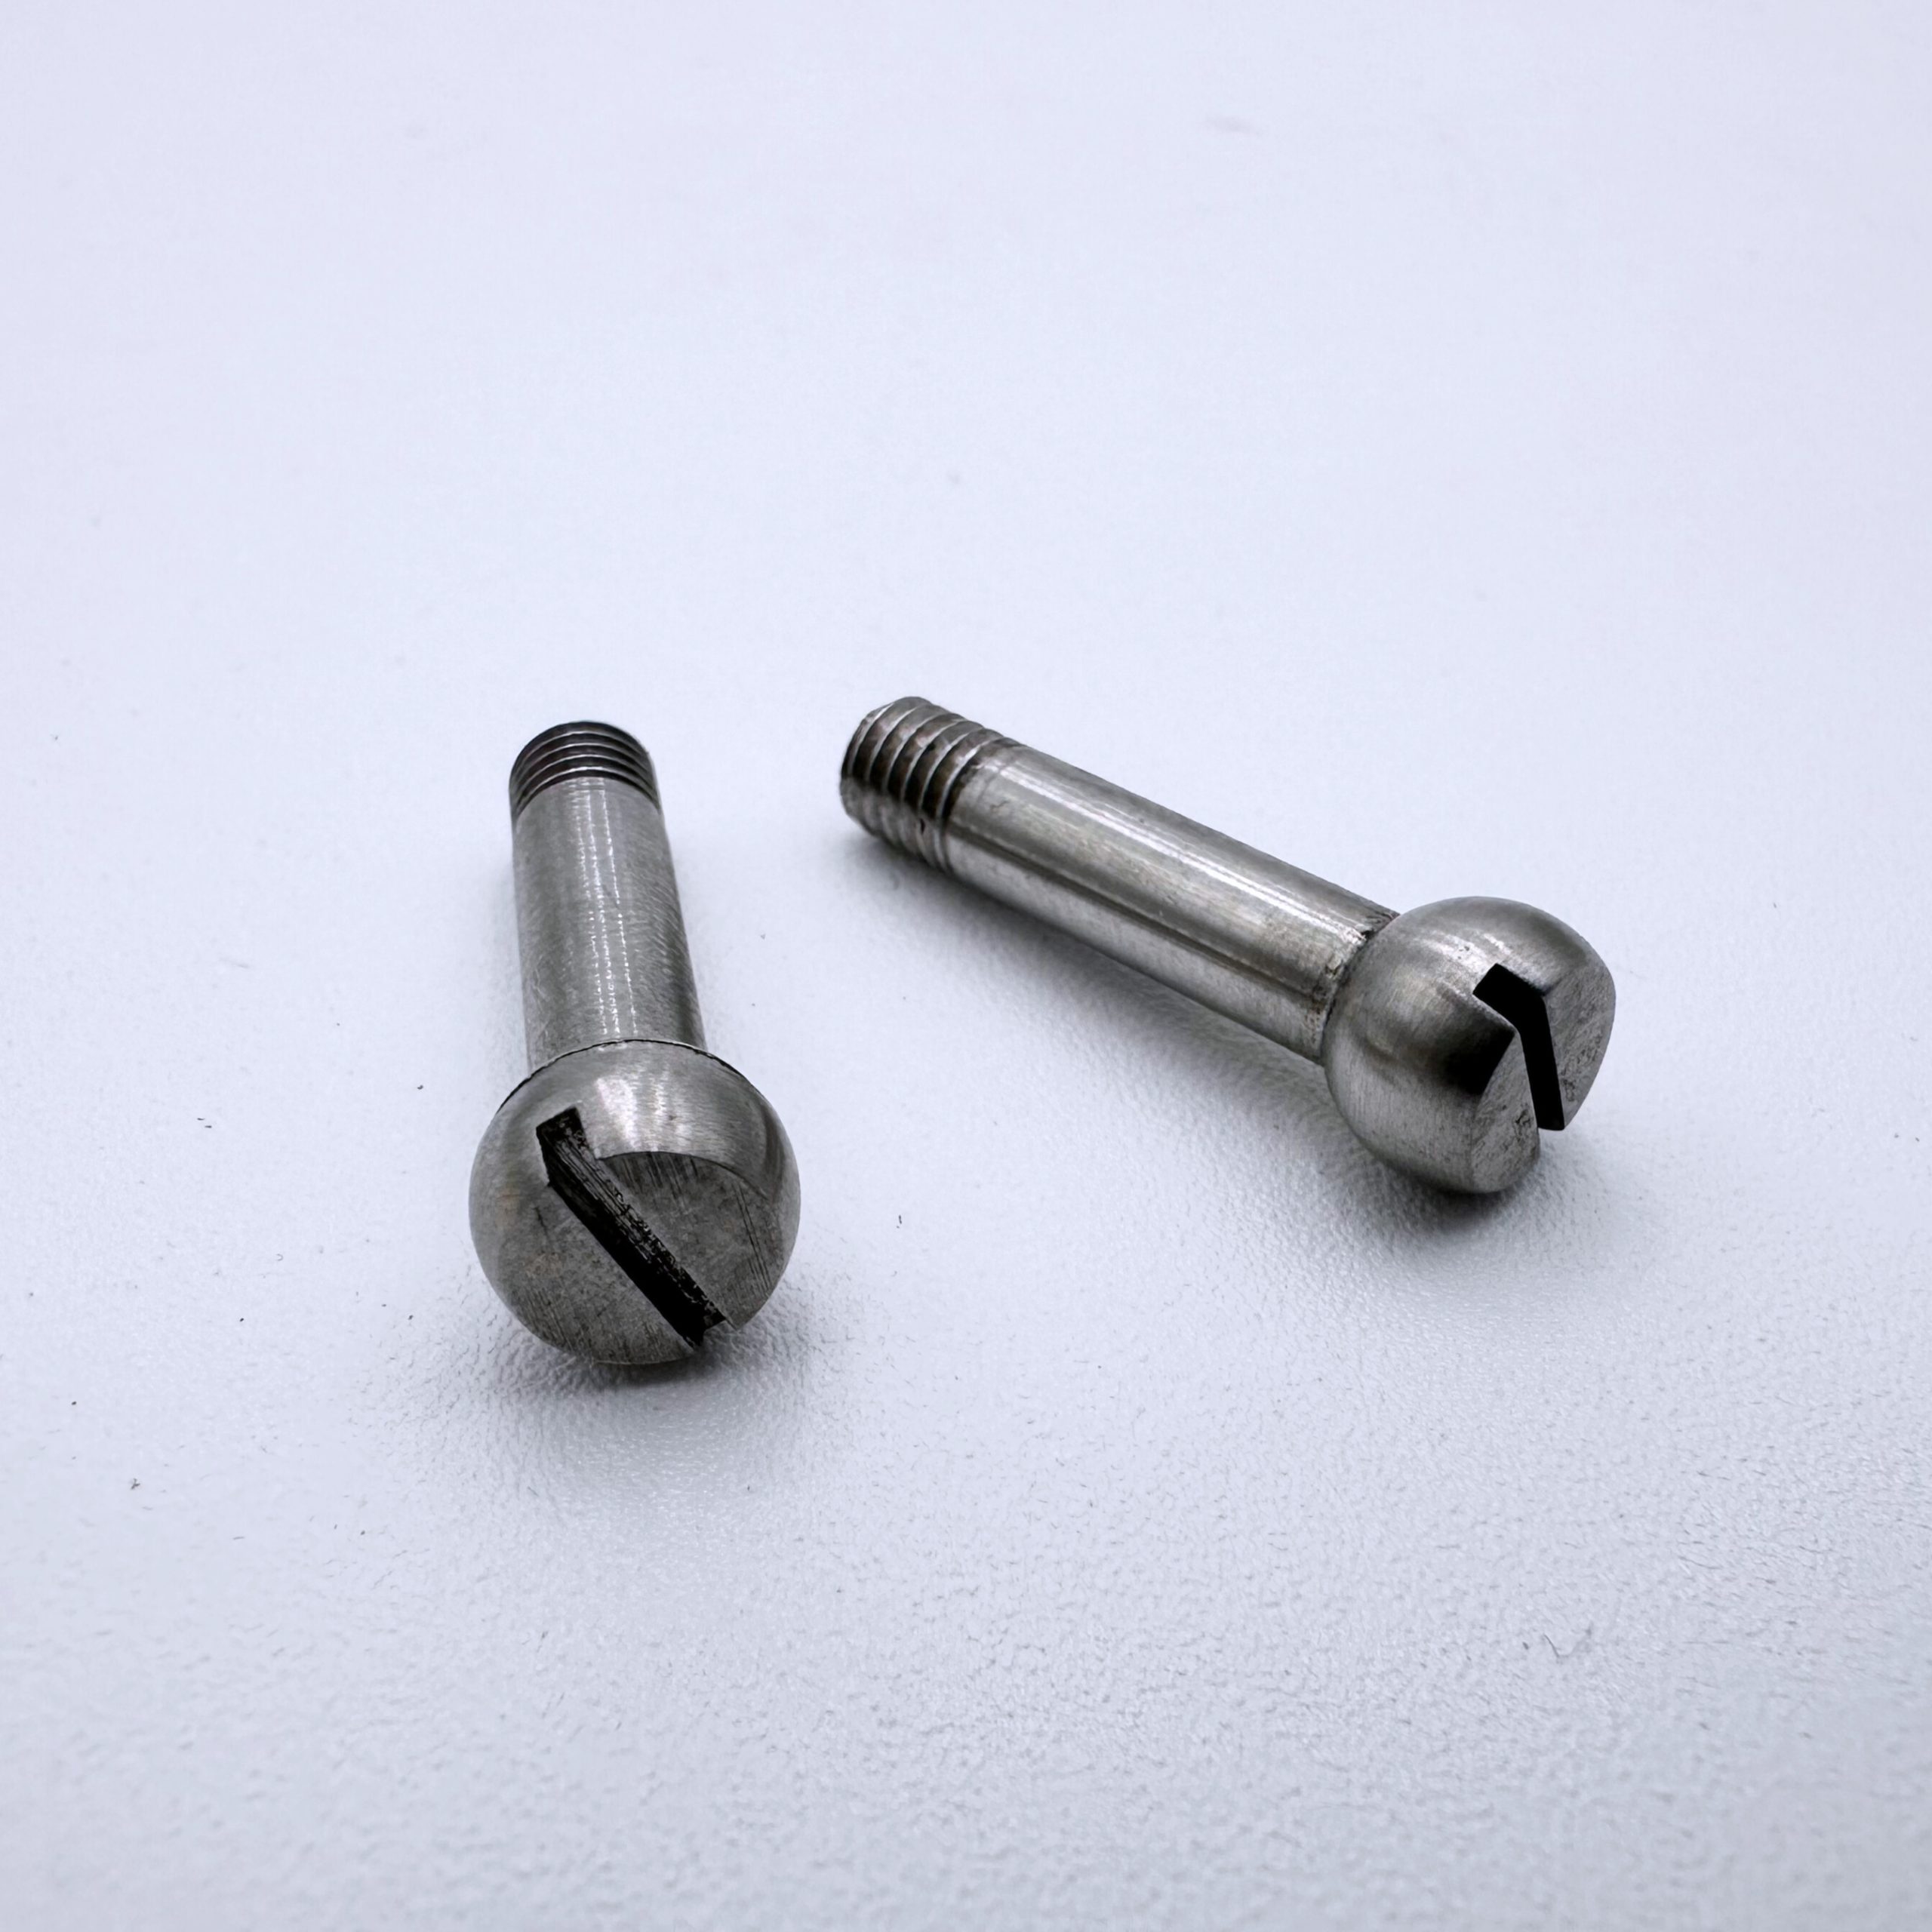 Screws (2) for Lock Plates, T-03-110